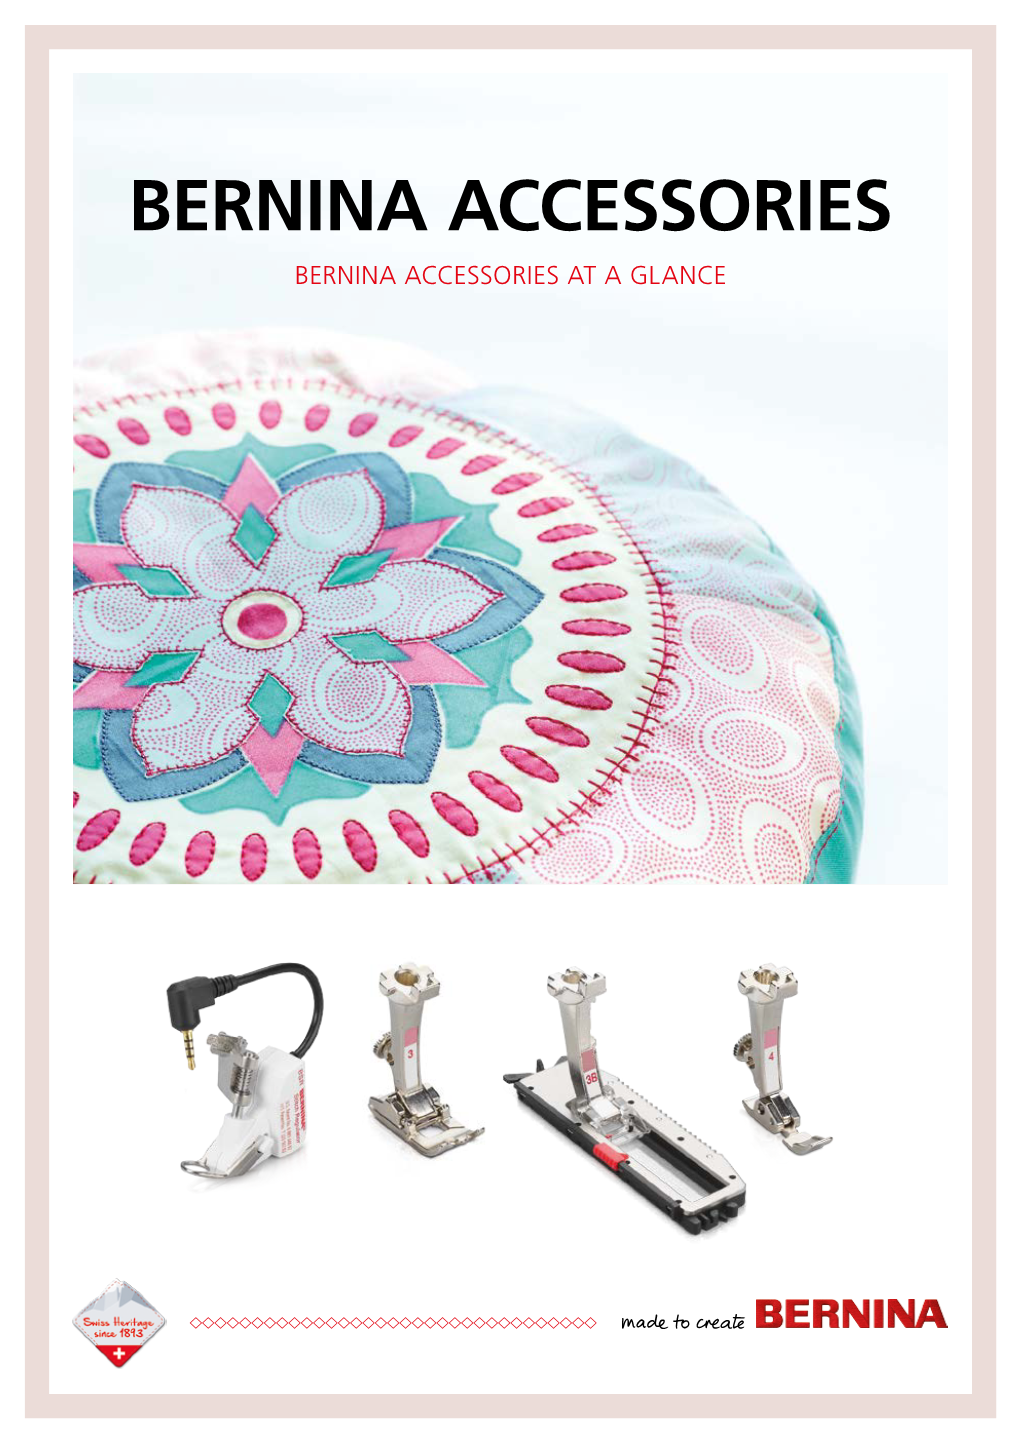 BERNINA Accessories Catalog